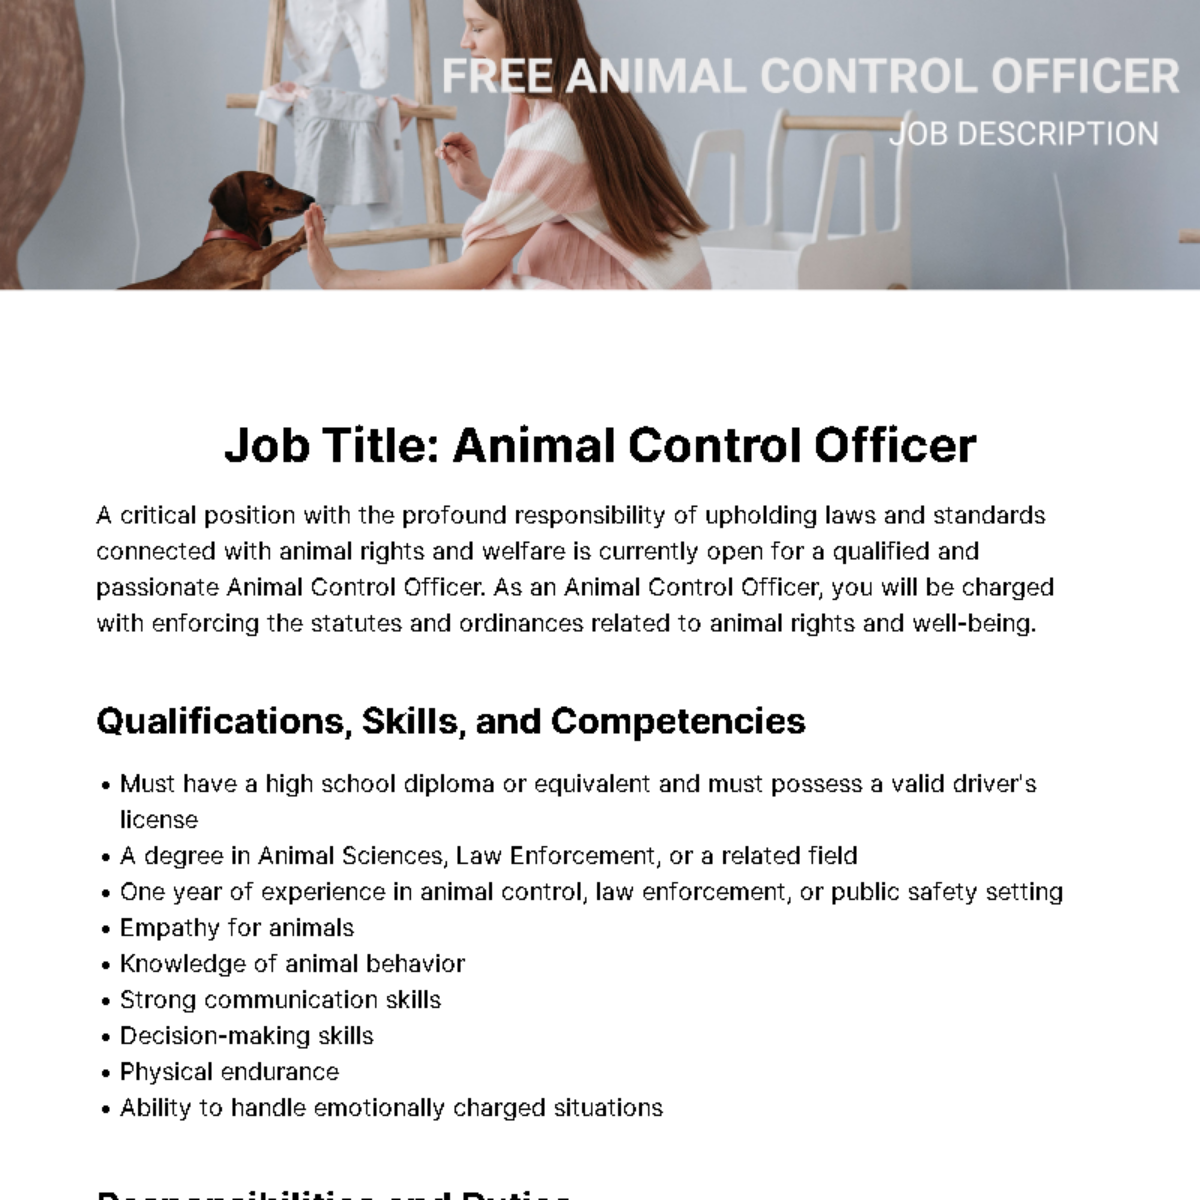 animal-control-officer-job-description-template-edit-online